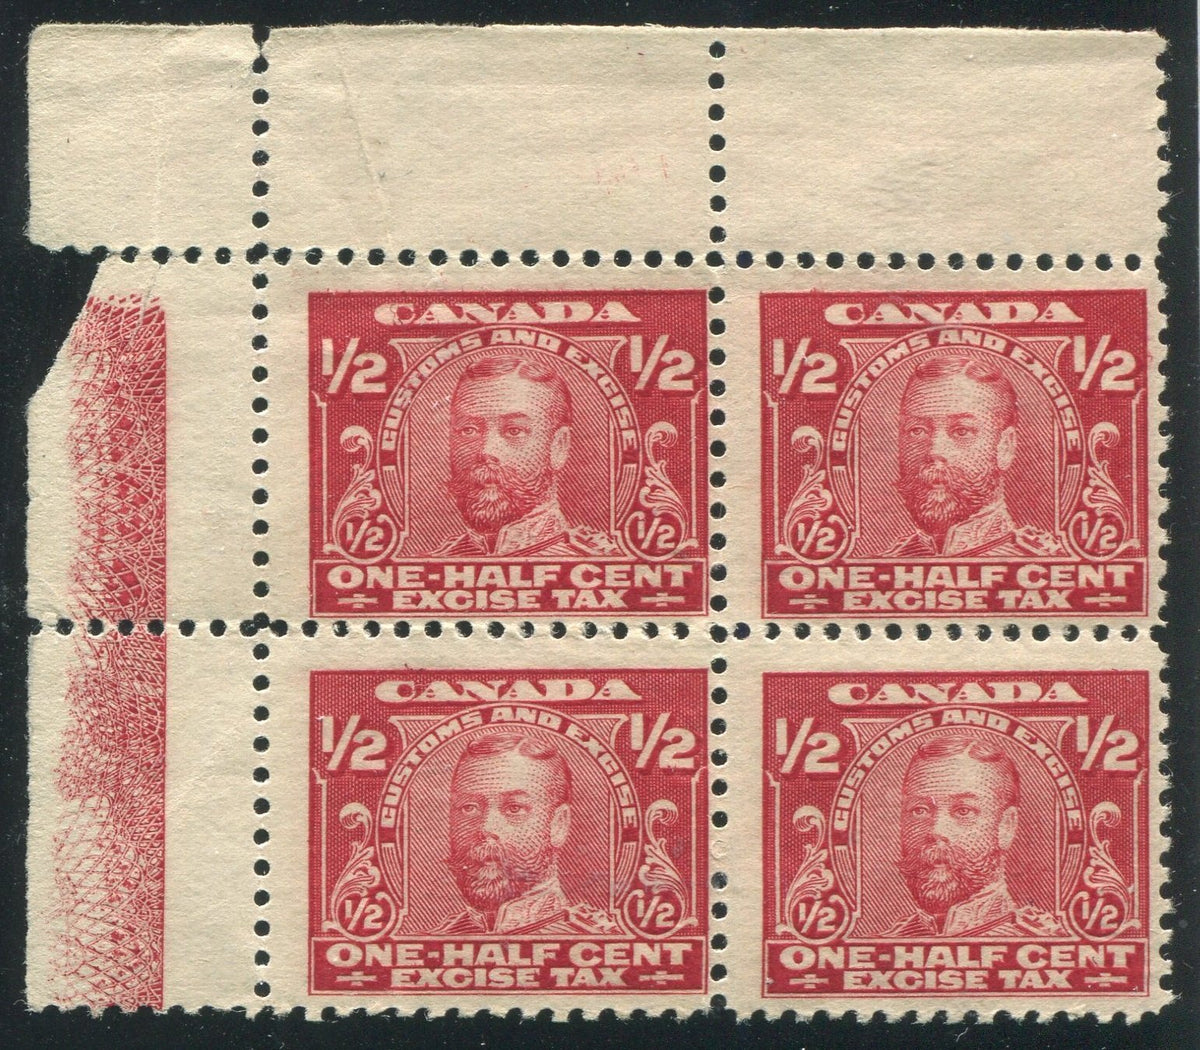 0002FX1710 - FX2 - Mint Lathework Block of 4 - Deveney Stamps Ltd. Canadian Stamps